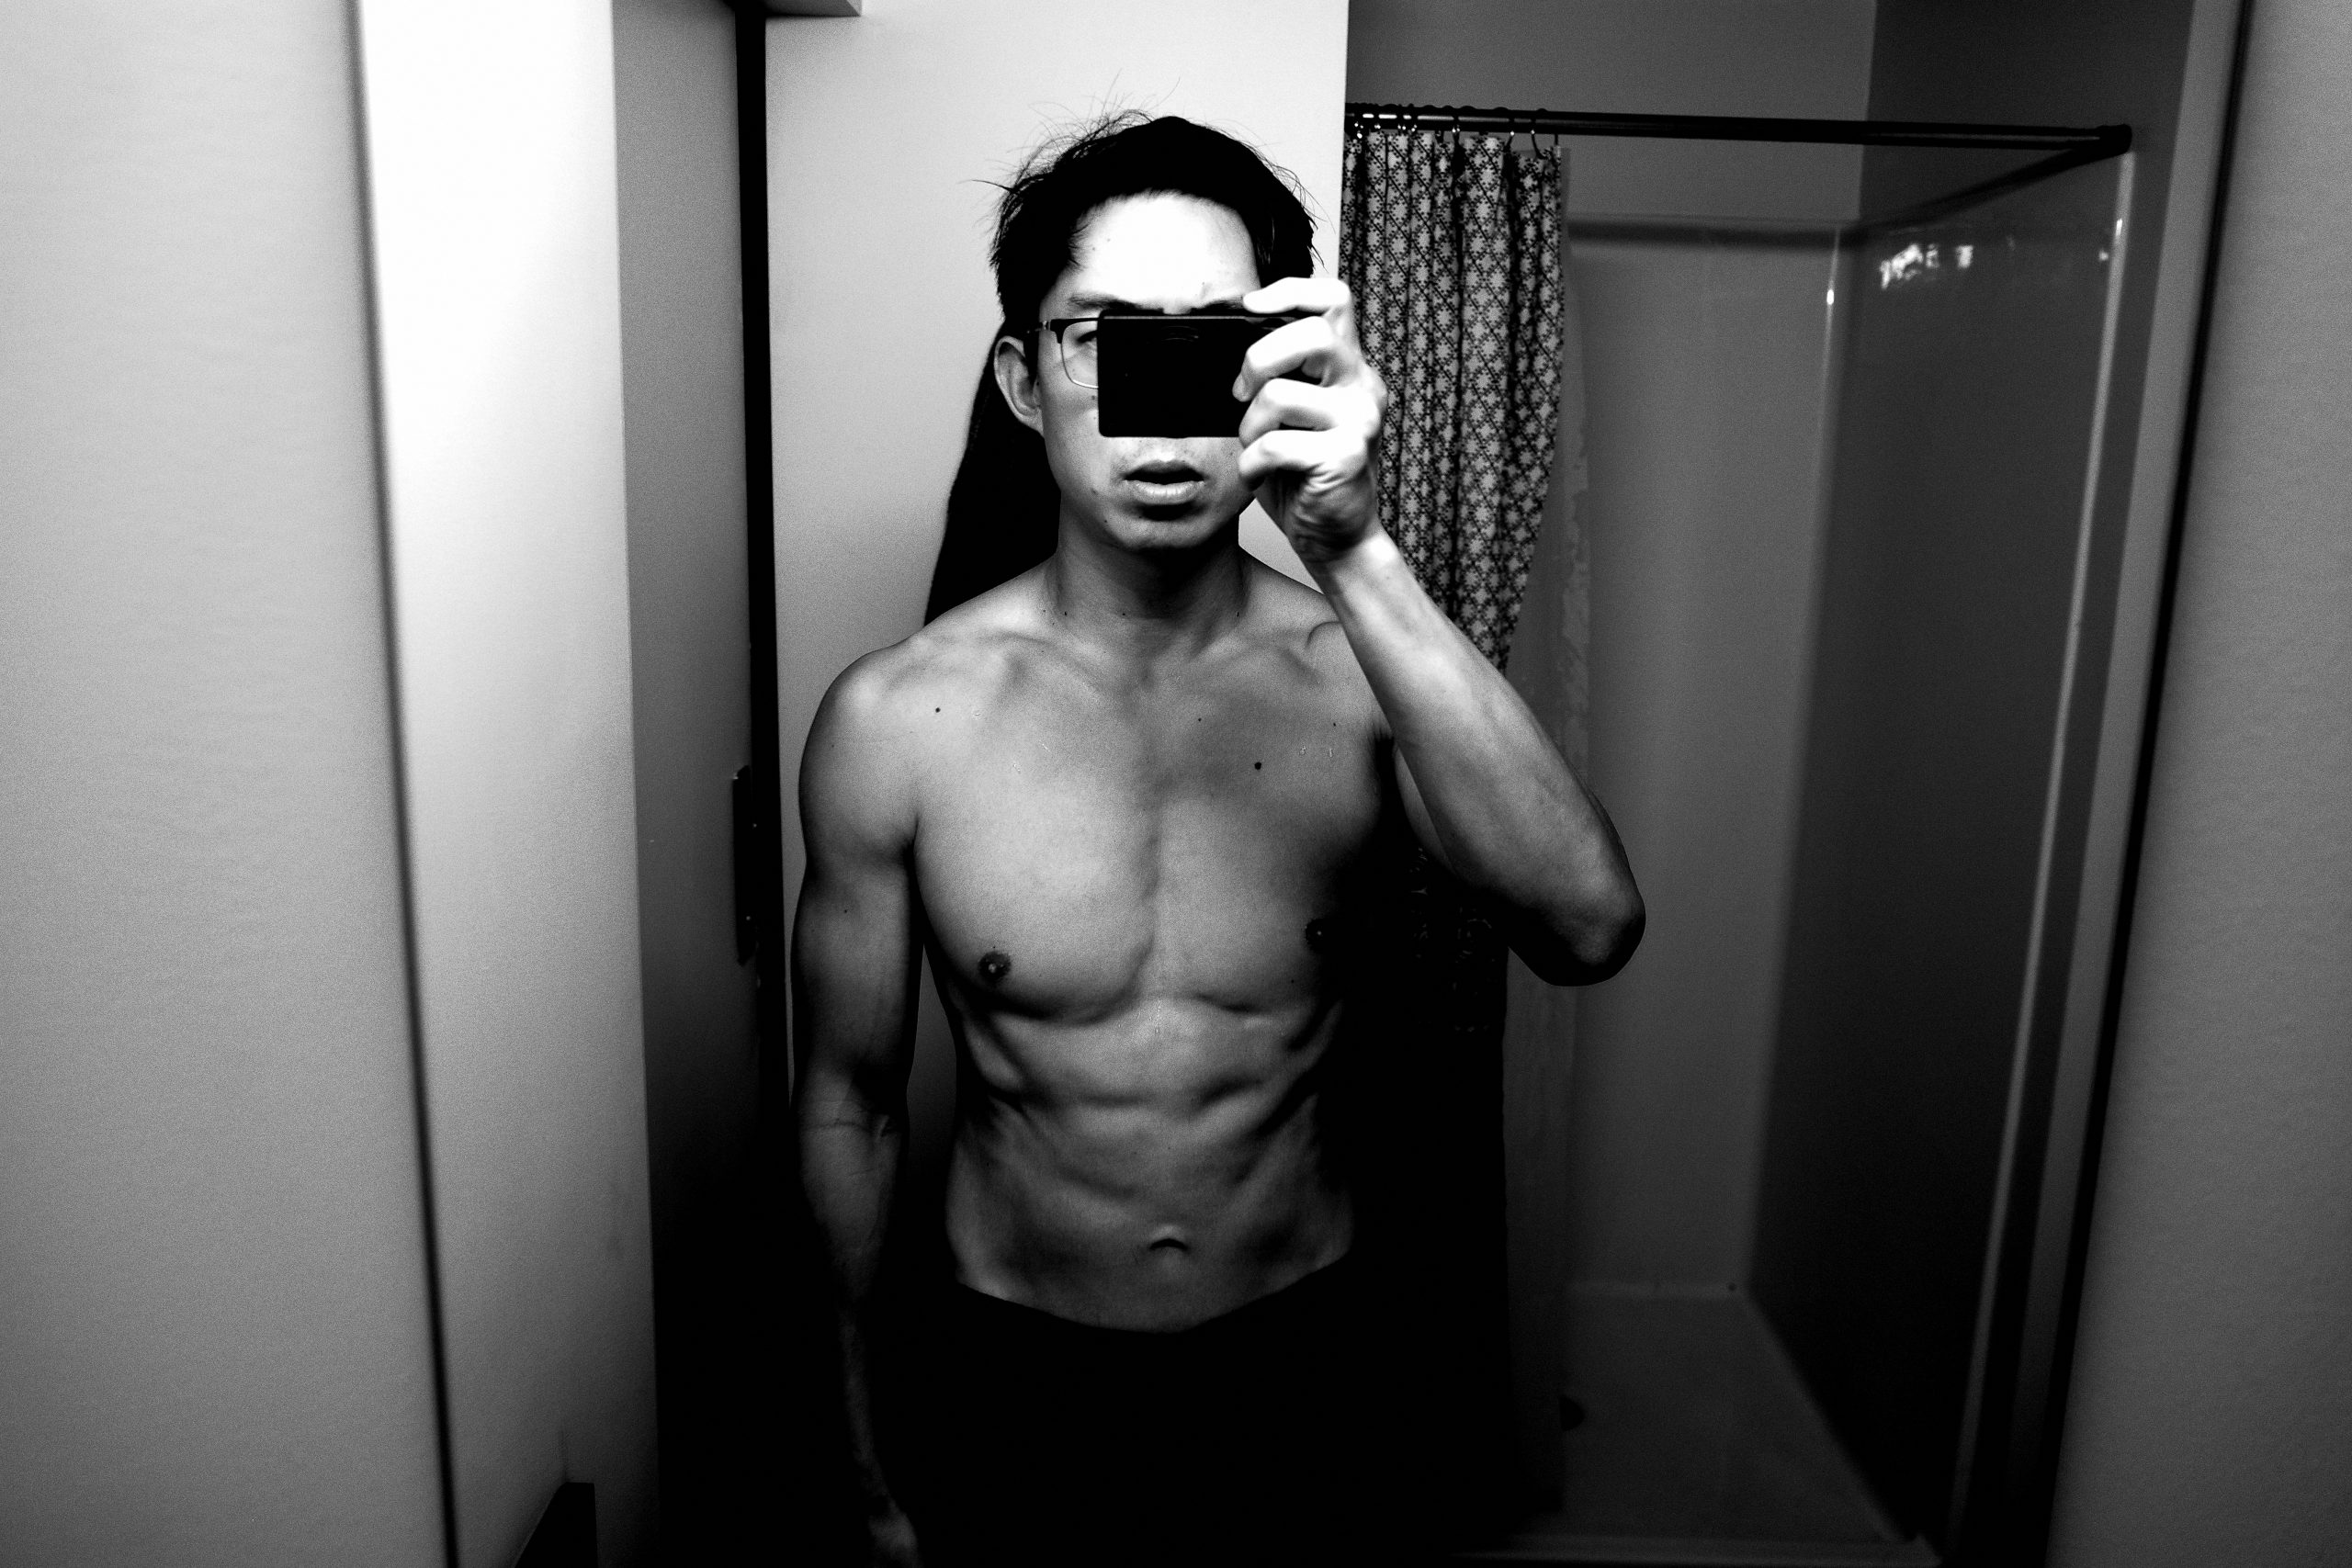 ERIC KIM Ricoh gr iii selfie topless bathroom muscle 6 pack abs